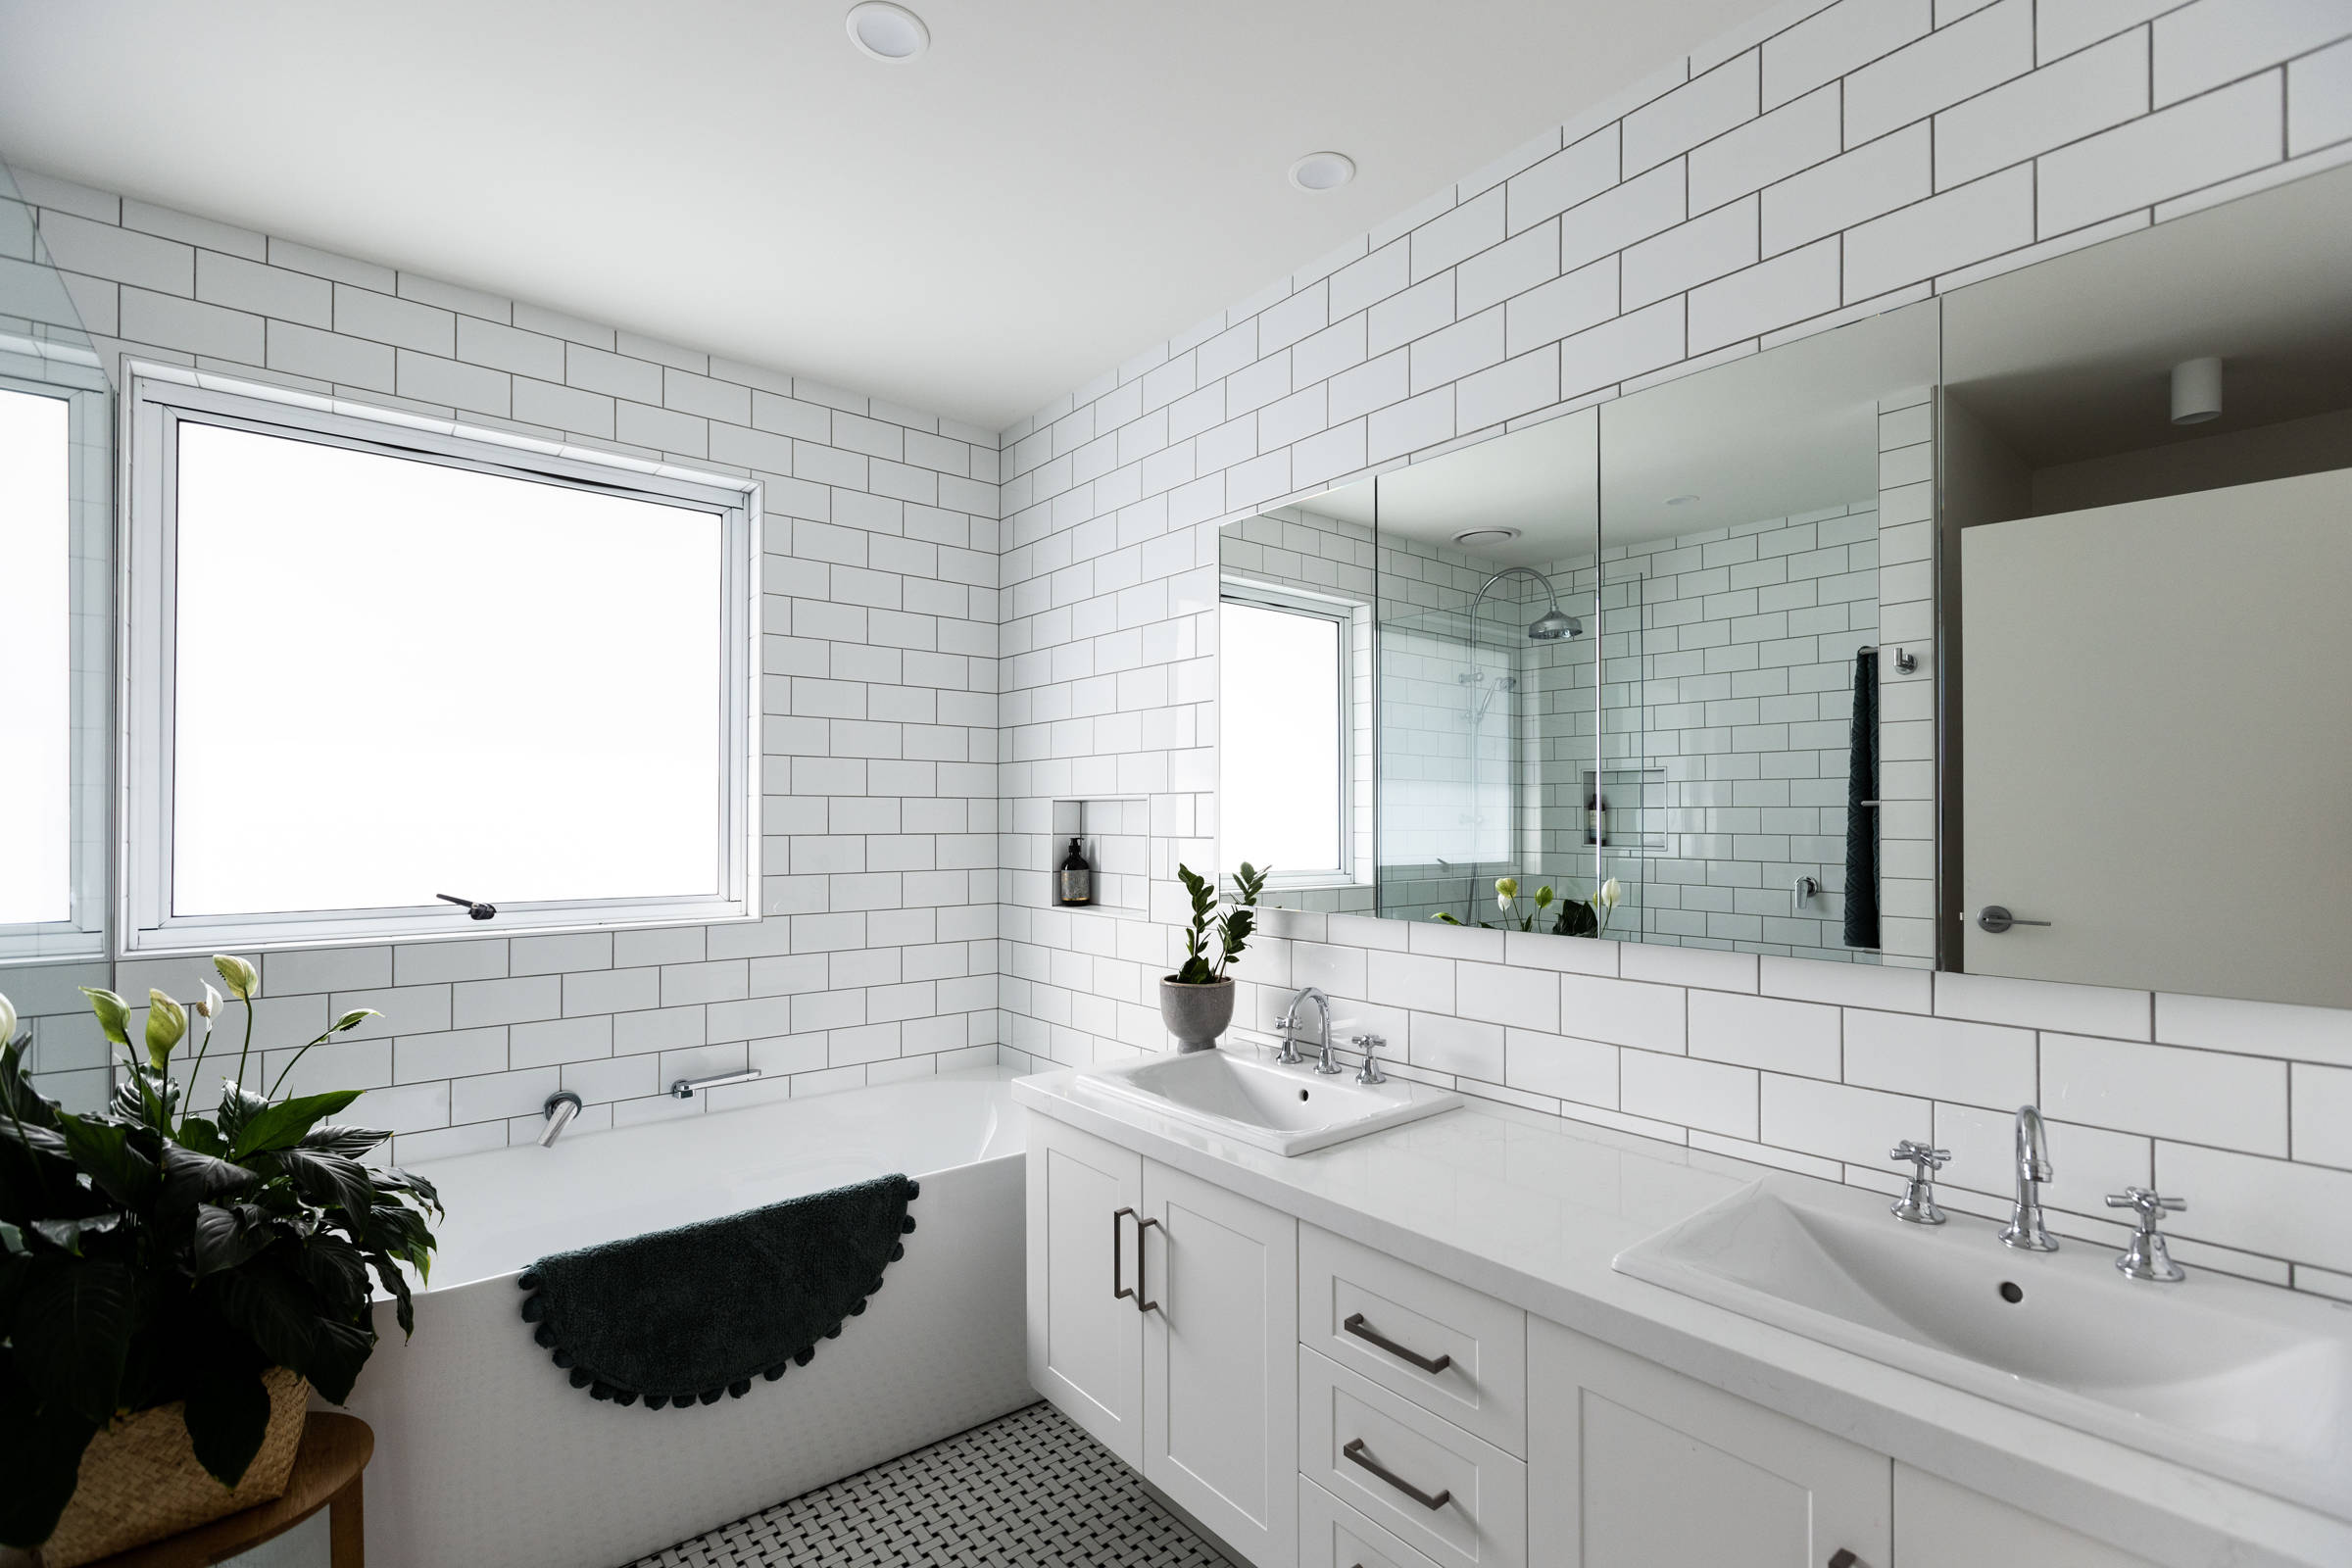 Bathroom renovation featuring white subway tiles and an Italian tile floor with a light, bright contemporary finish. Photo: Jordan Davis.